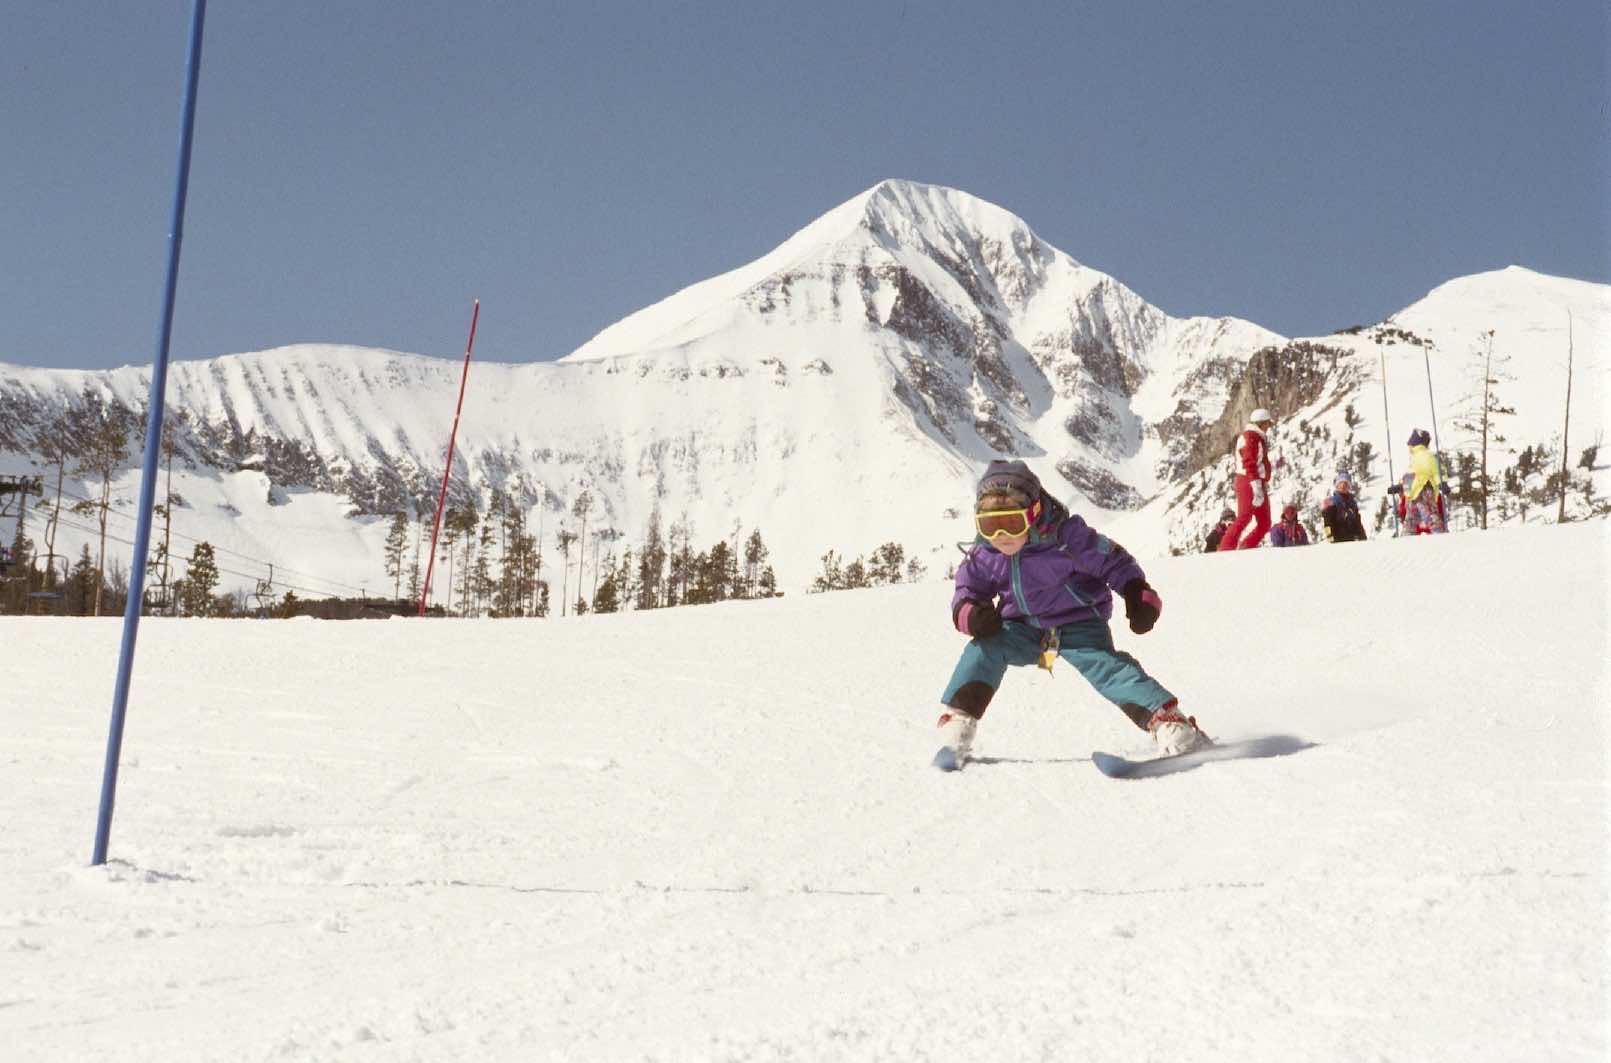 Historic photo of a child skiing at Big Sky Resort